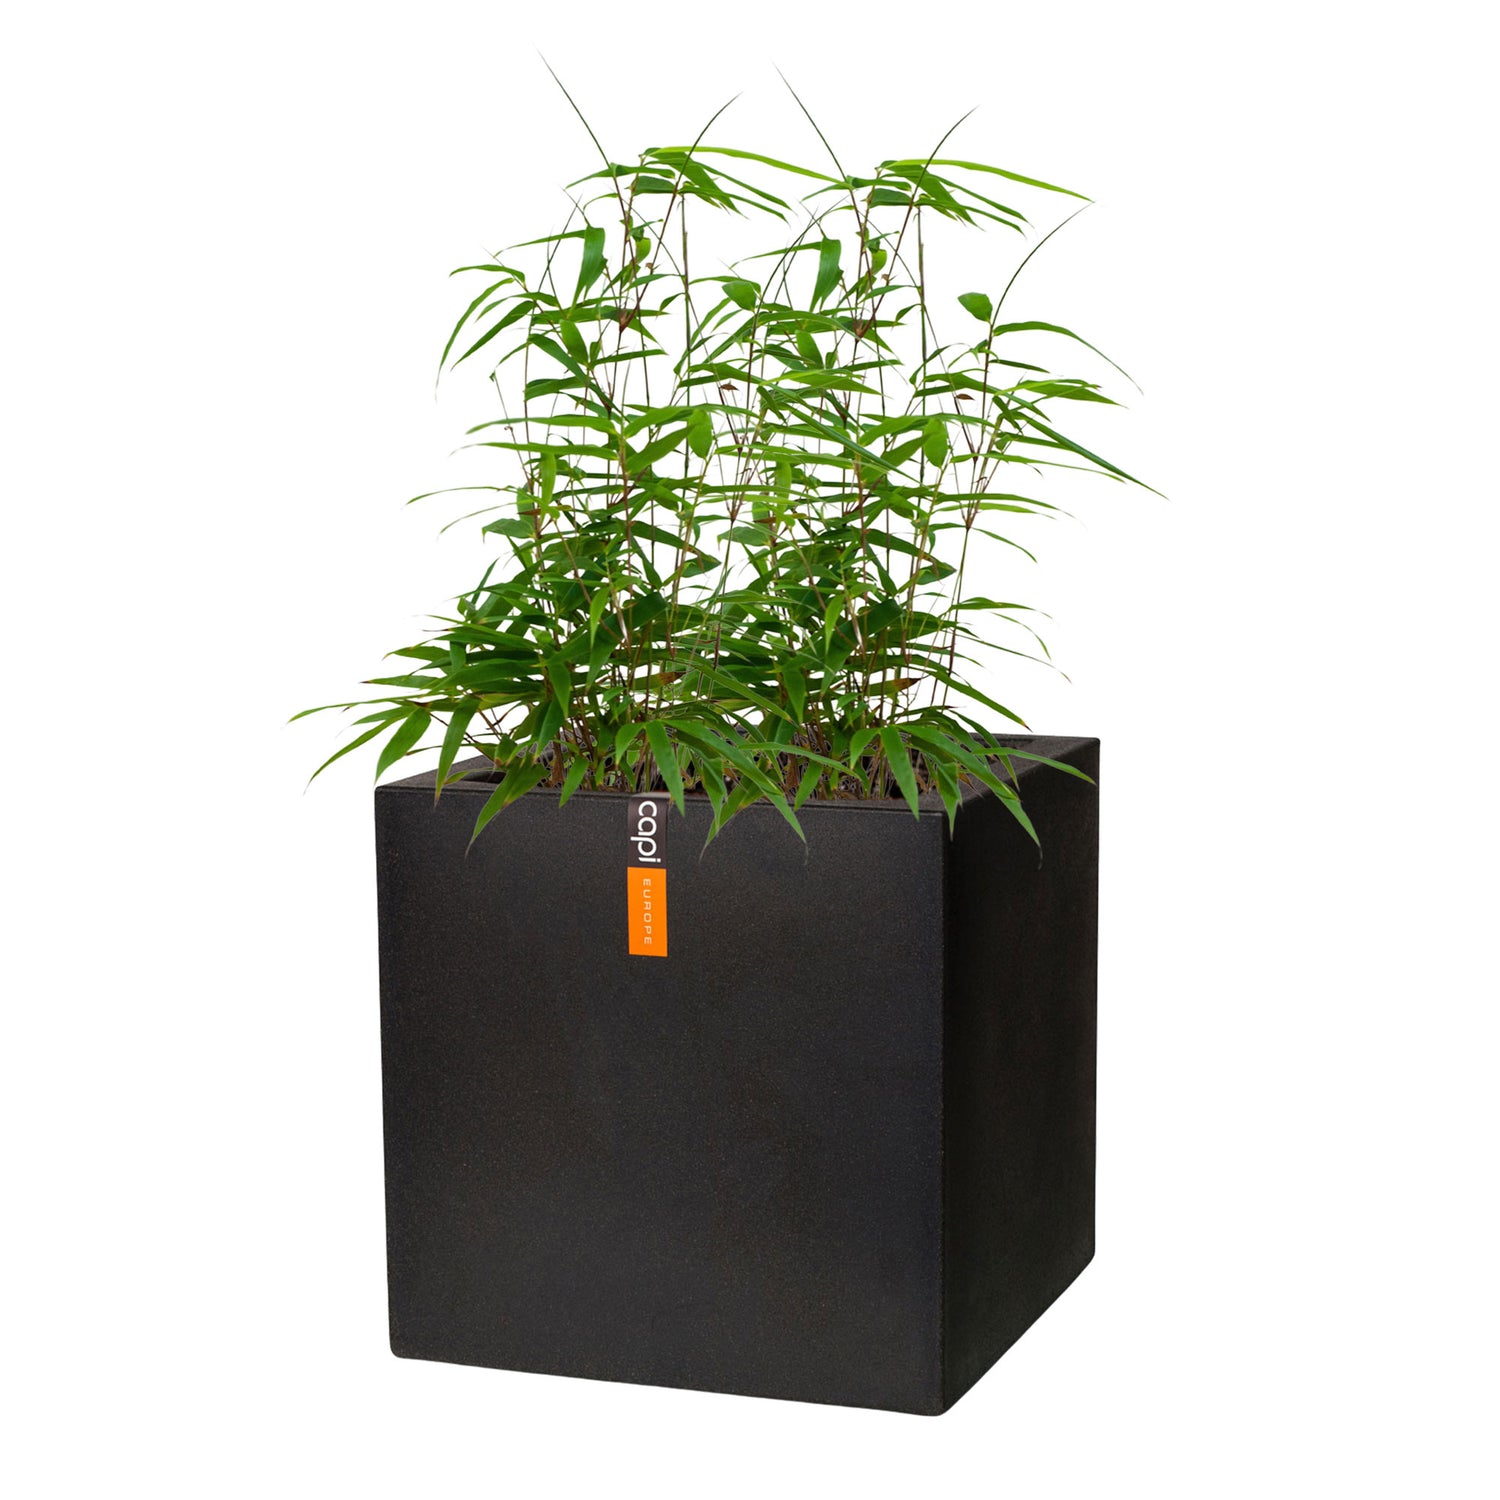 Bamboo in a decorative pot